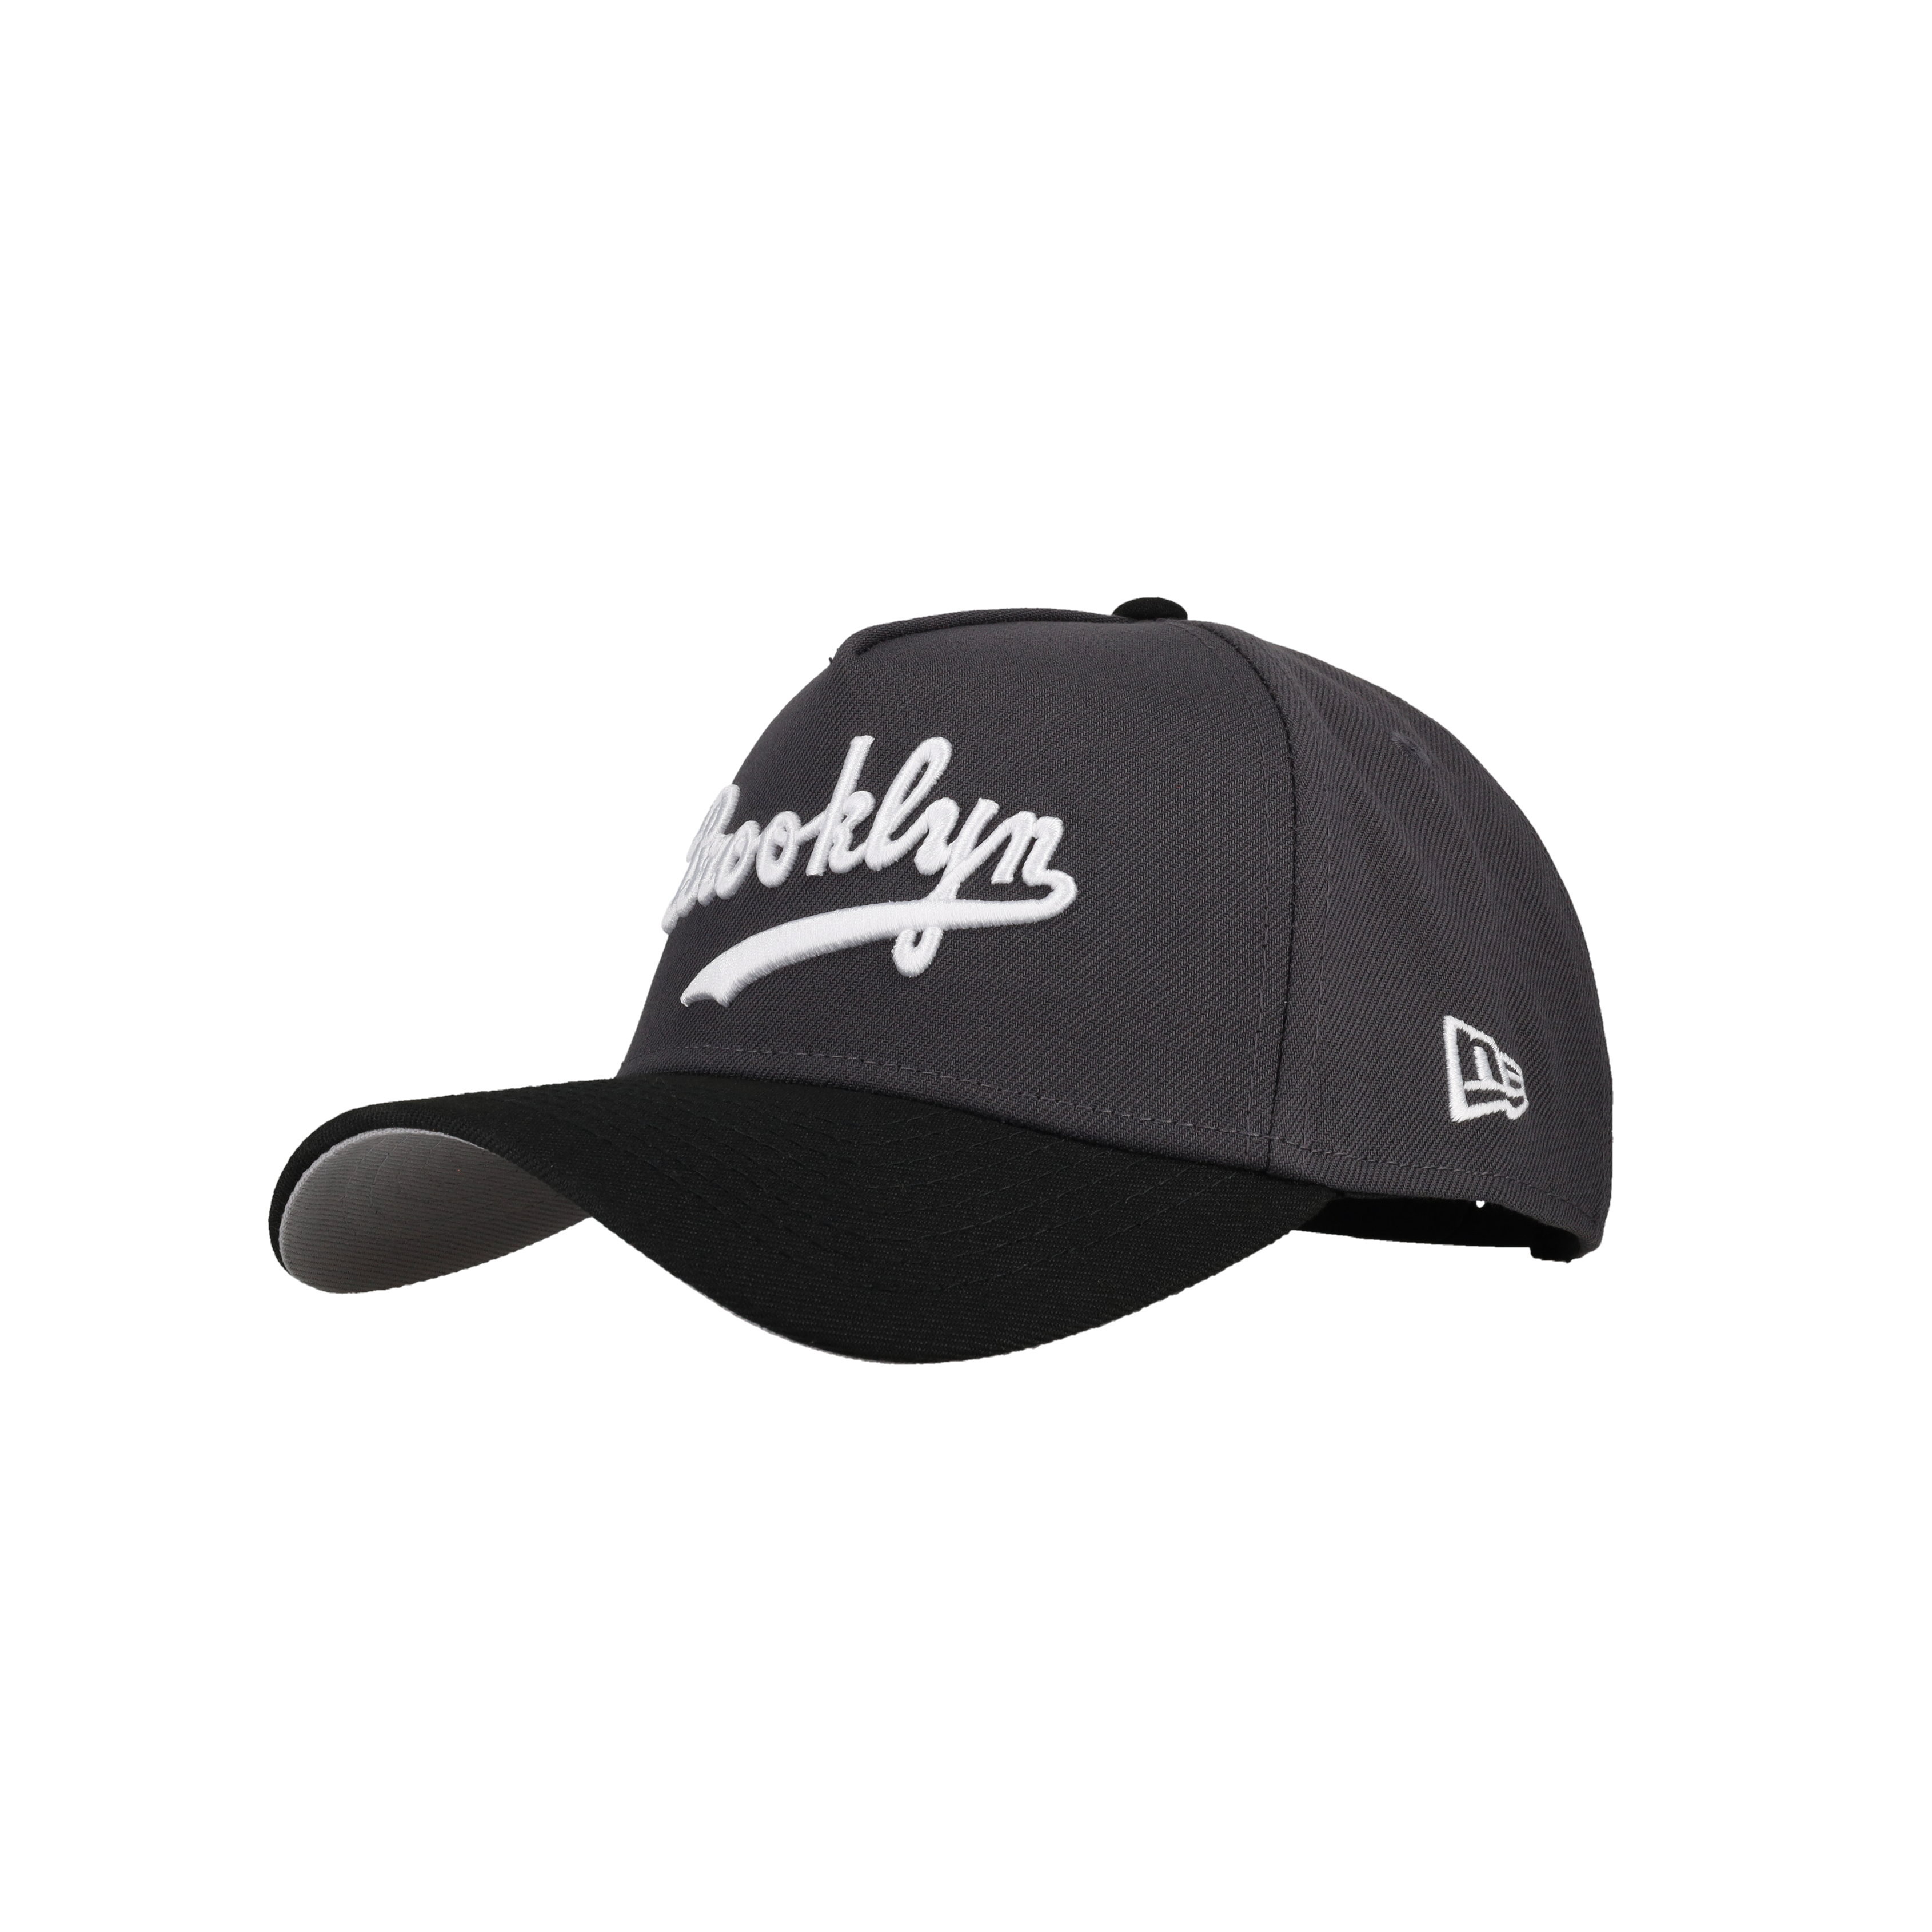 Brooklyn Dodgers 9Forty A Frame Snapback Hat (Graphite/Black)